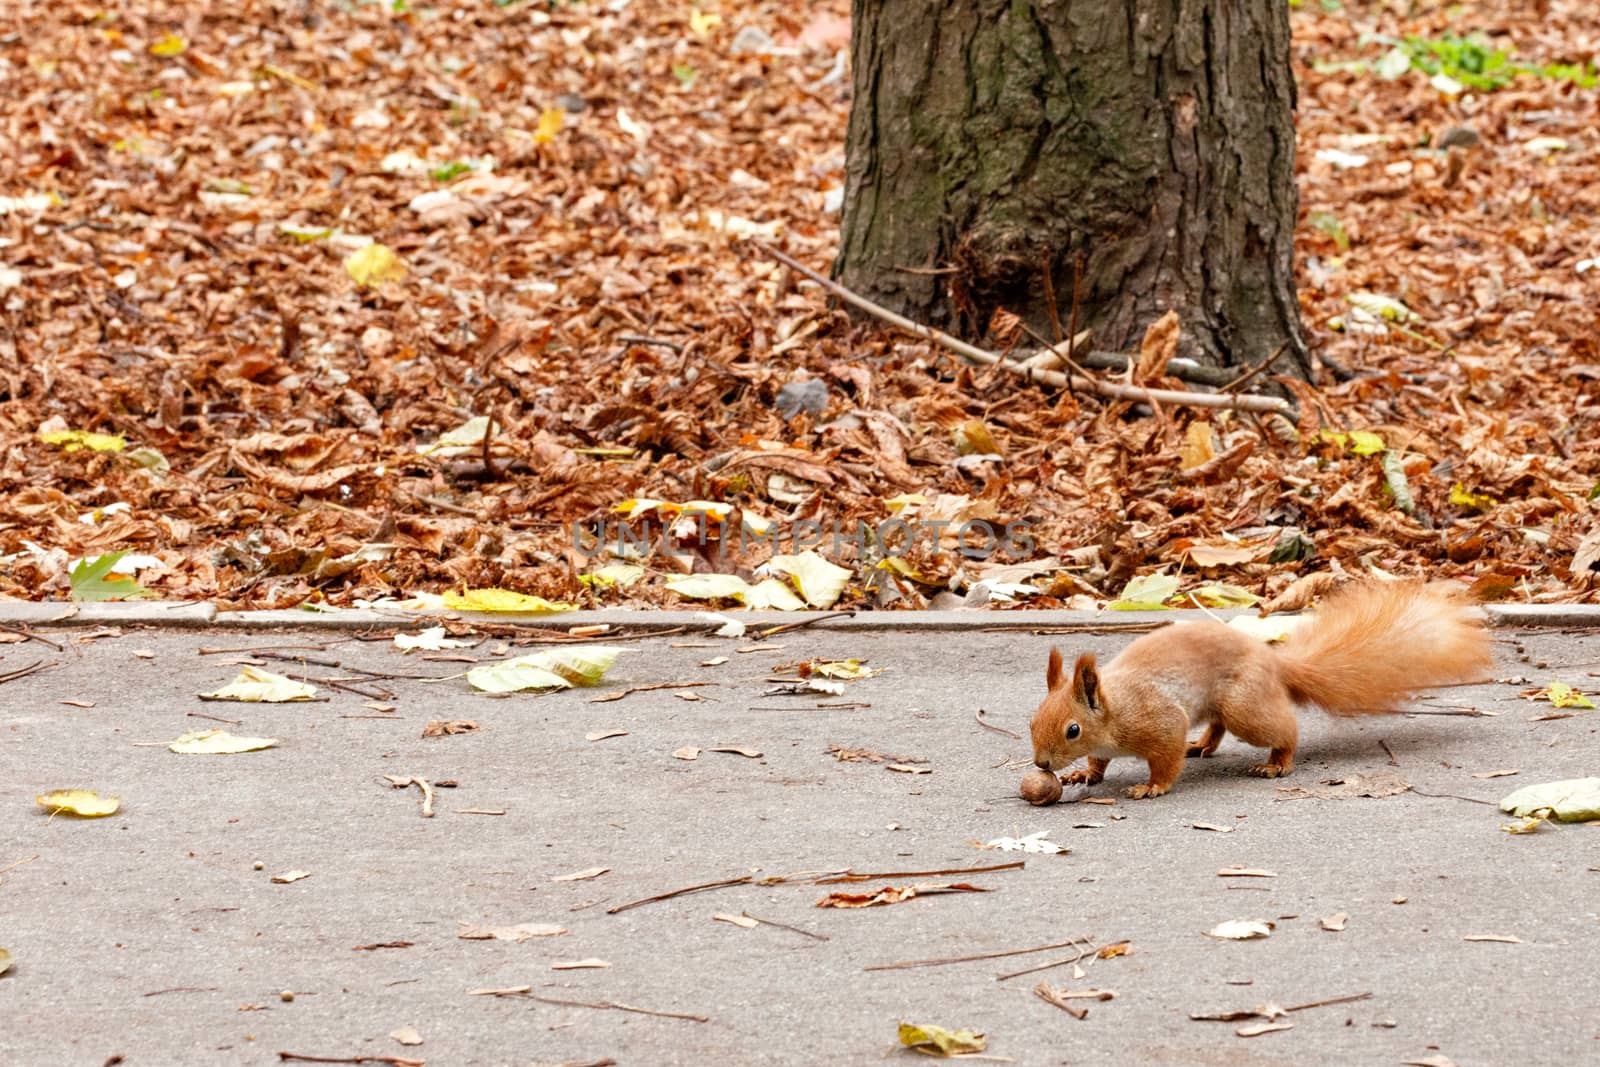 Fluffy orange squirrel walks a walnut on an autumn asphalt path in an autumn park. Close up image with copy space.